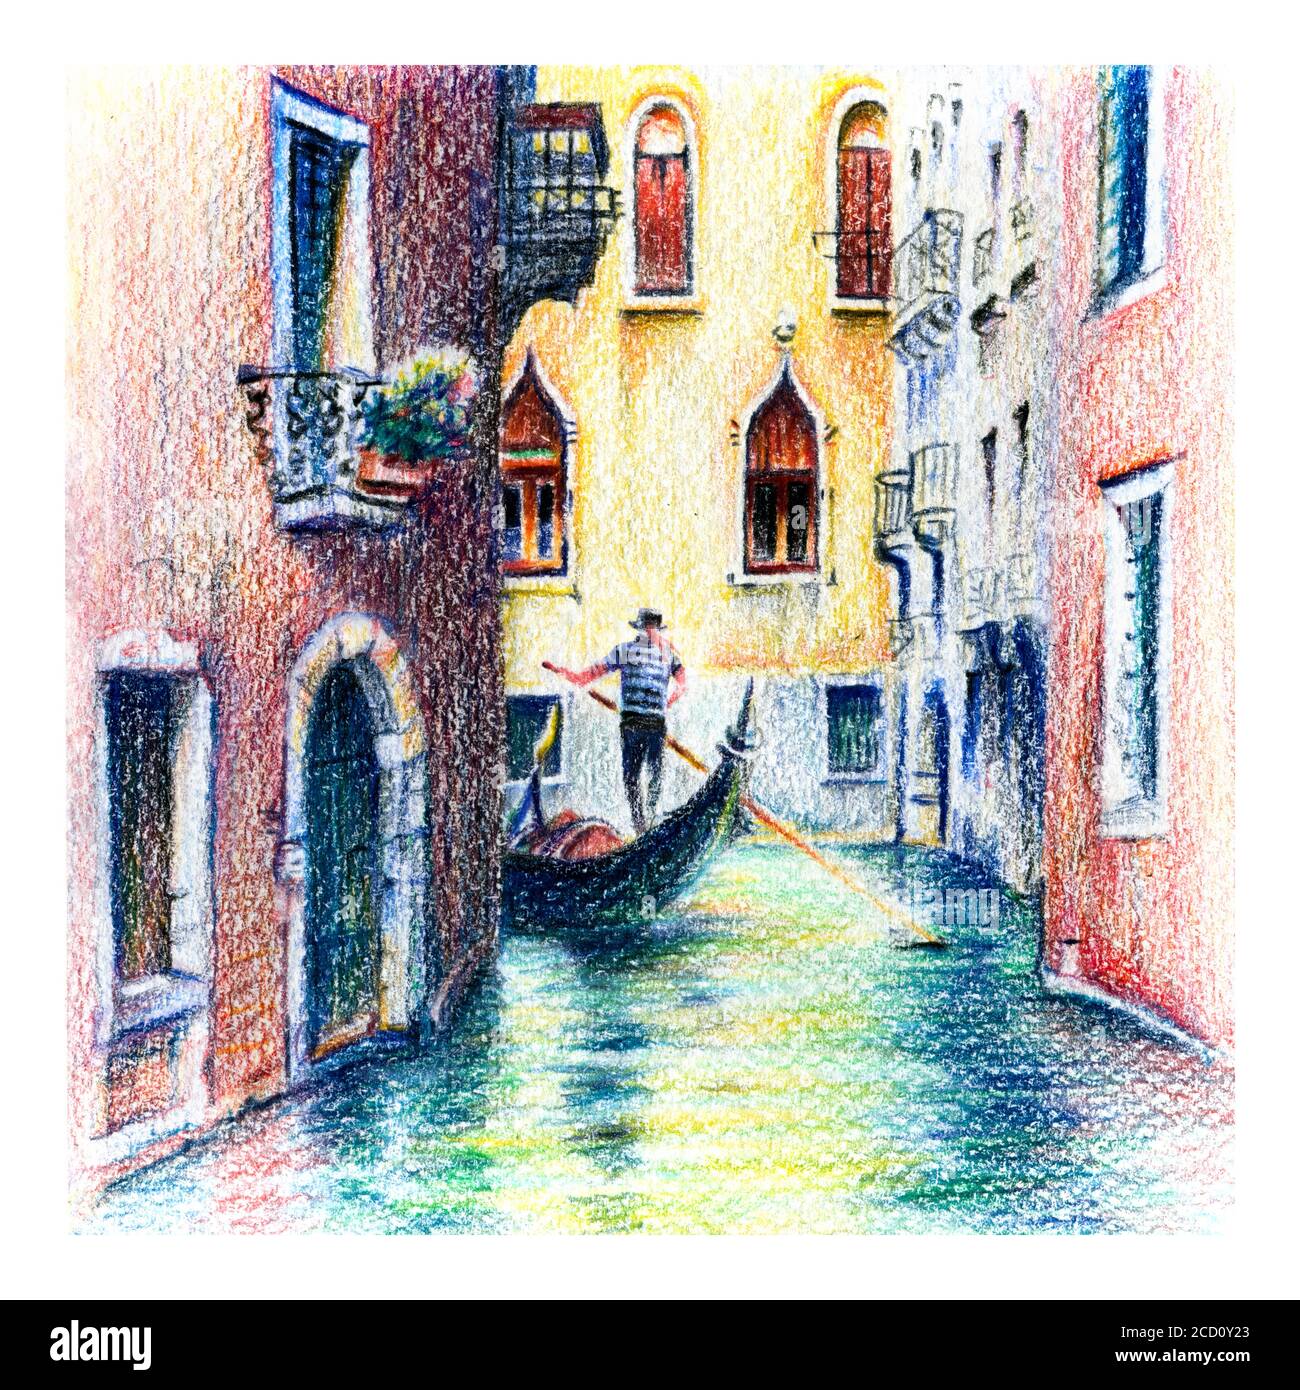 330 Venice Italy Grand Canal Illustrations RoyaltyFree Vector Graphics   Clip Art  iStock  Venice italy gondola Venice italy carnival Florence